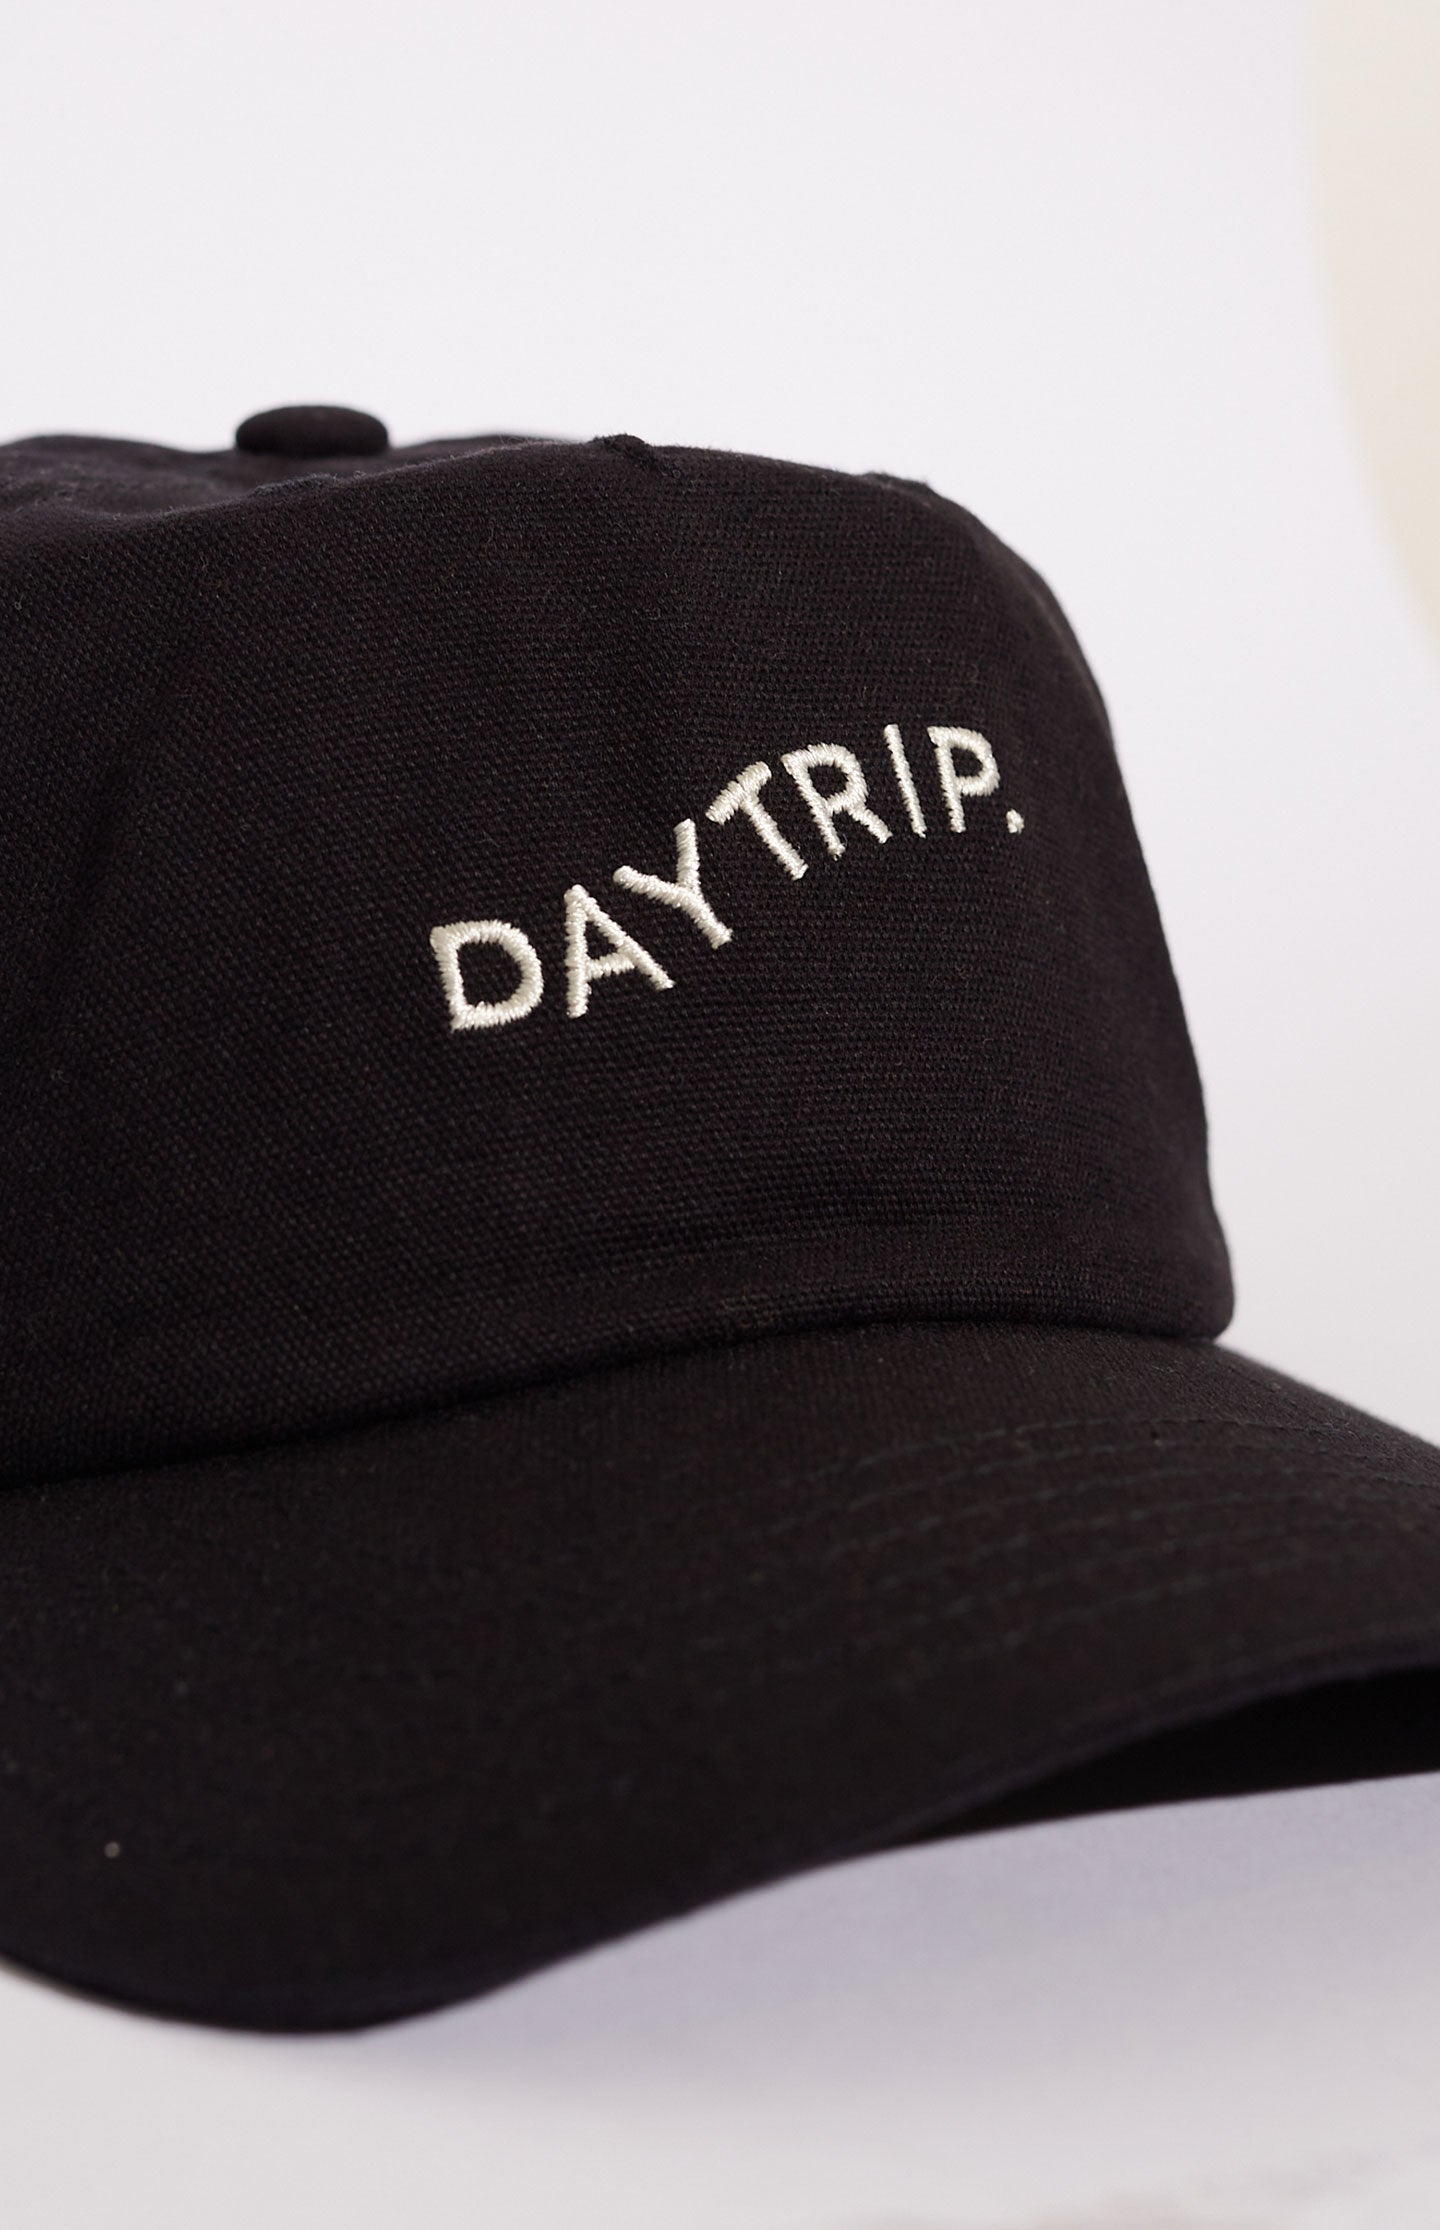 Daytrip Store - Trip Cap - Black